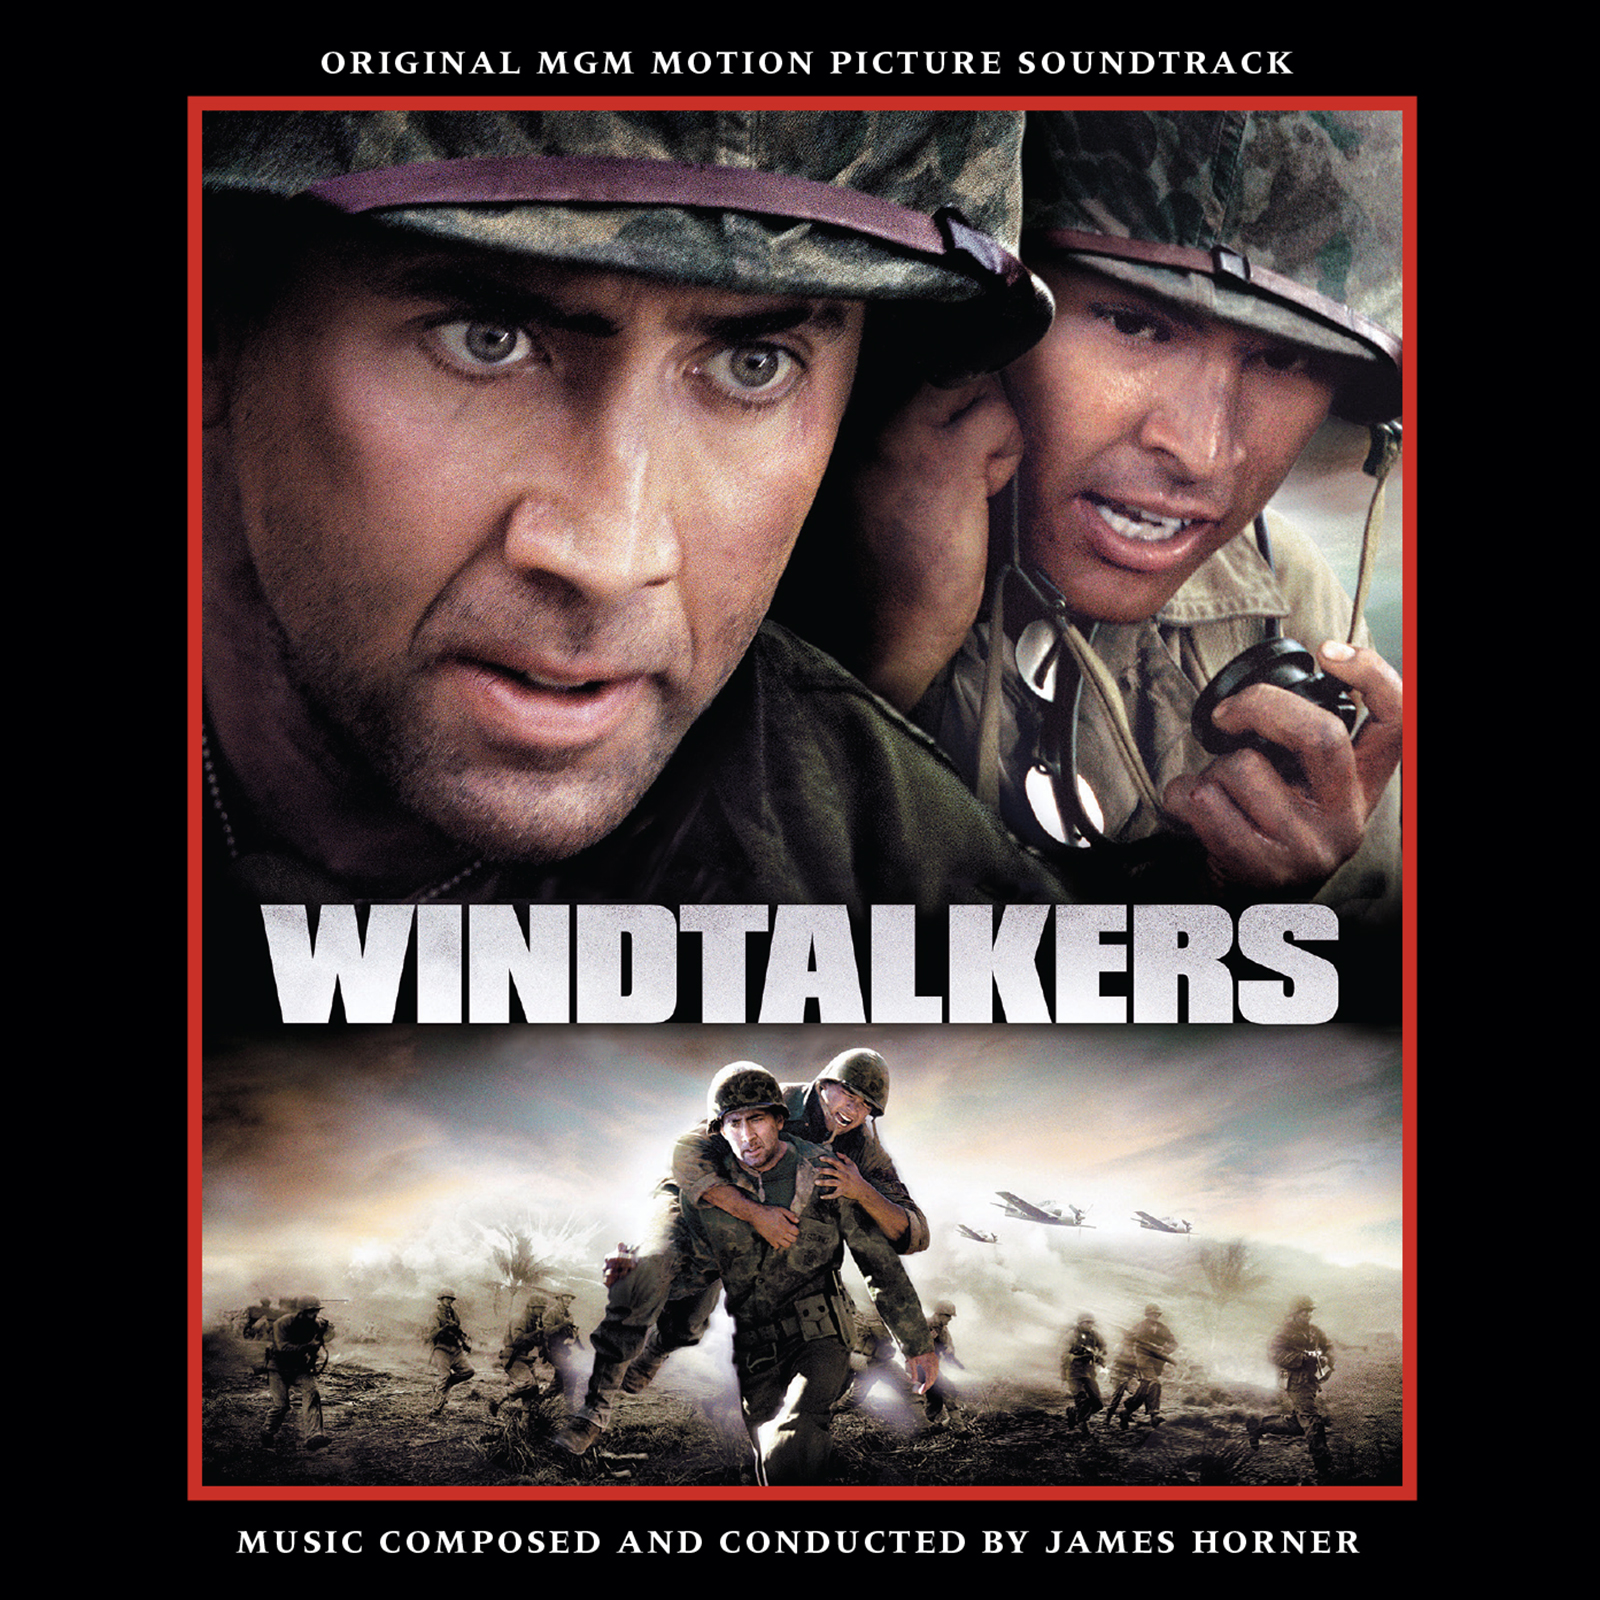 Windtalkers Soundtrack (Expanded by James Horner) -- Seeders: 1 -- Leechers: 0